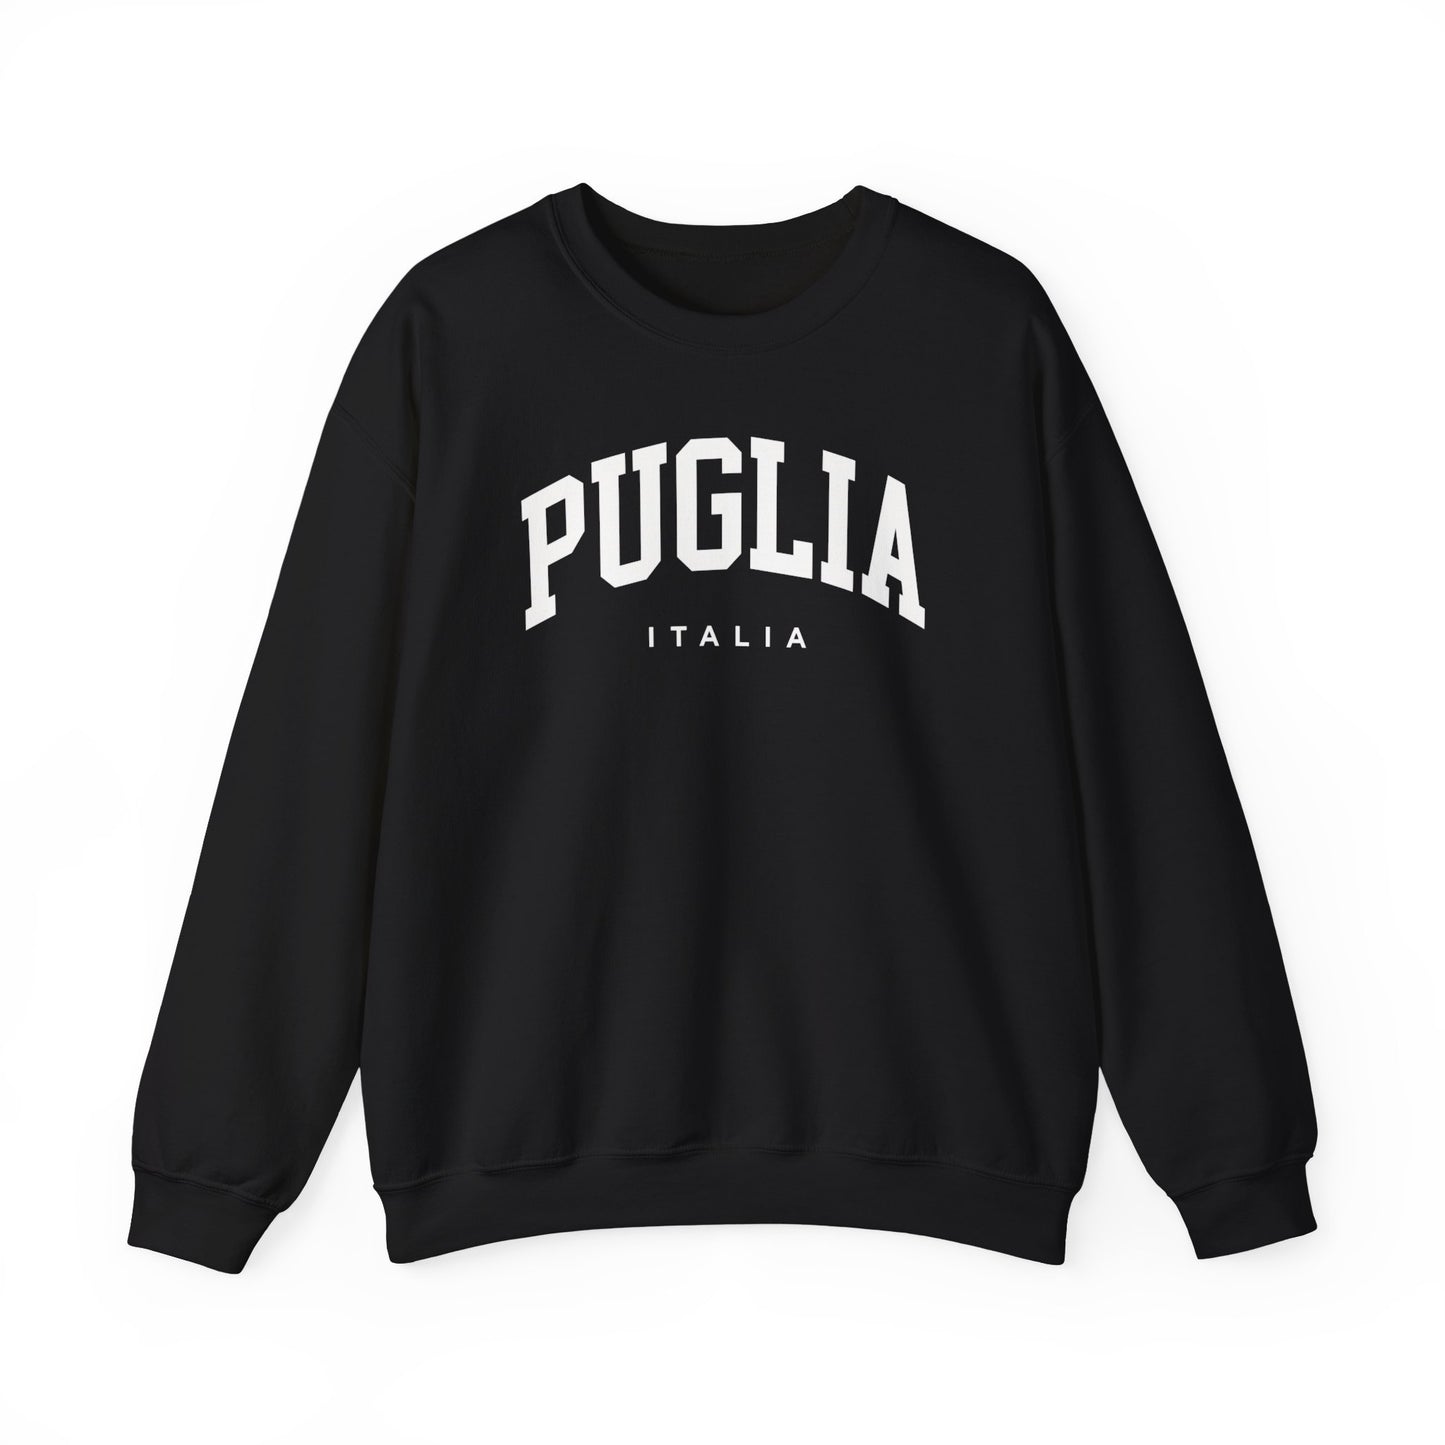 Apulia Italy Sweatshirt